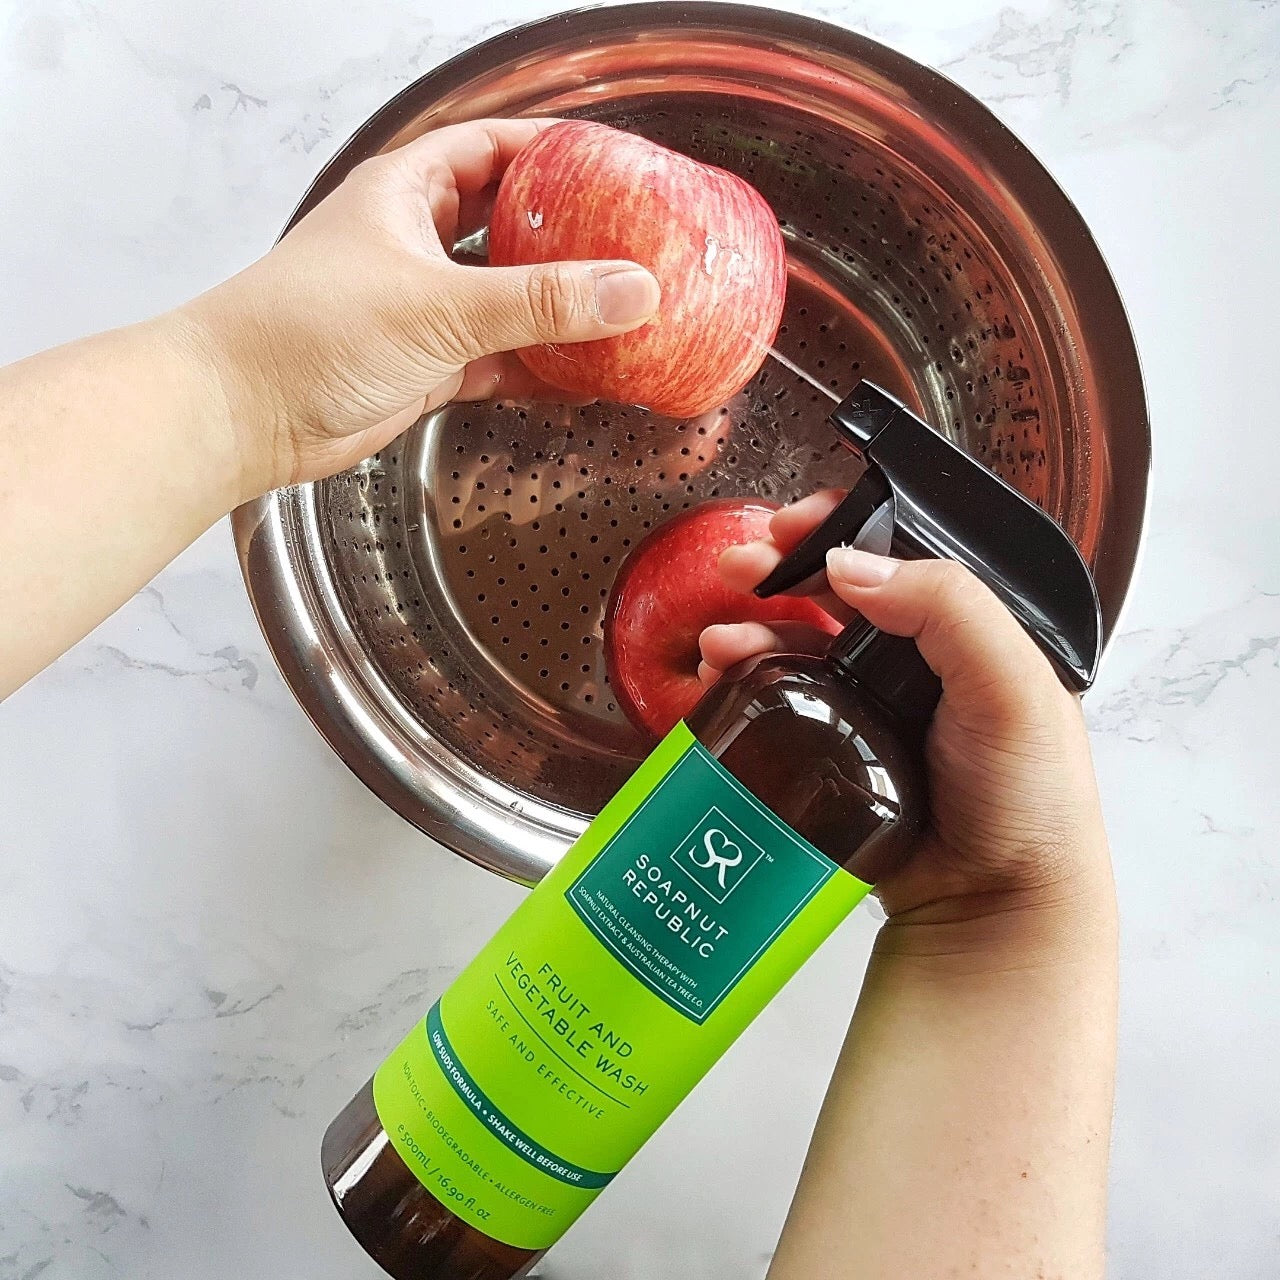 Spray onto apples - Soapnut Republic Fruit & Vegetable Wash